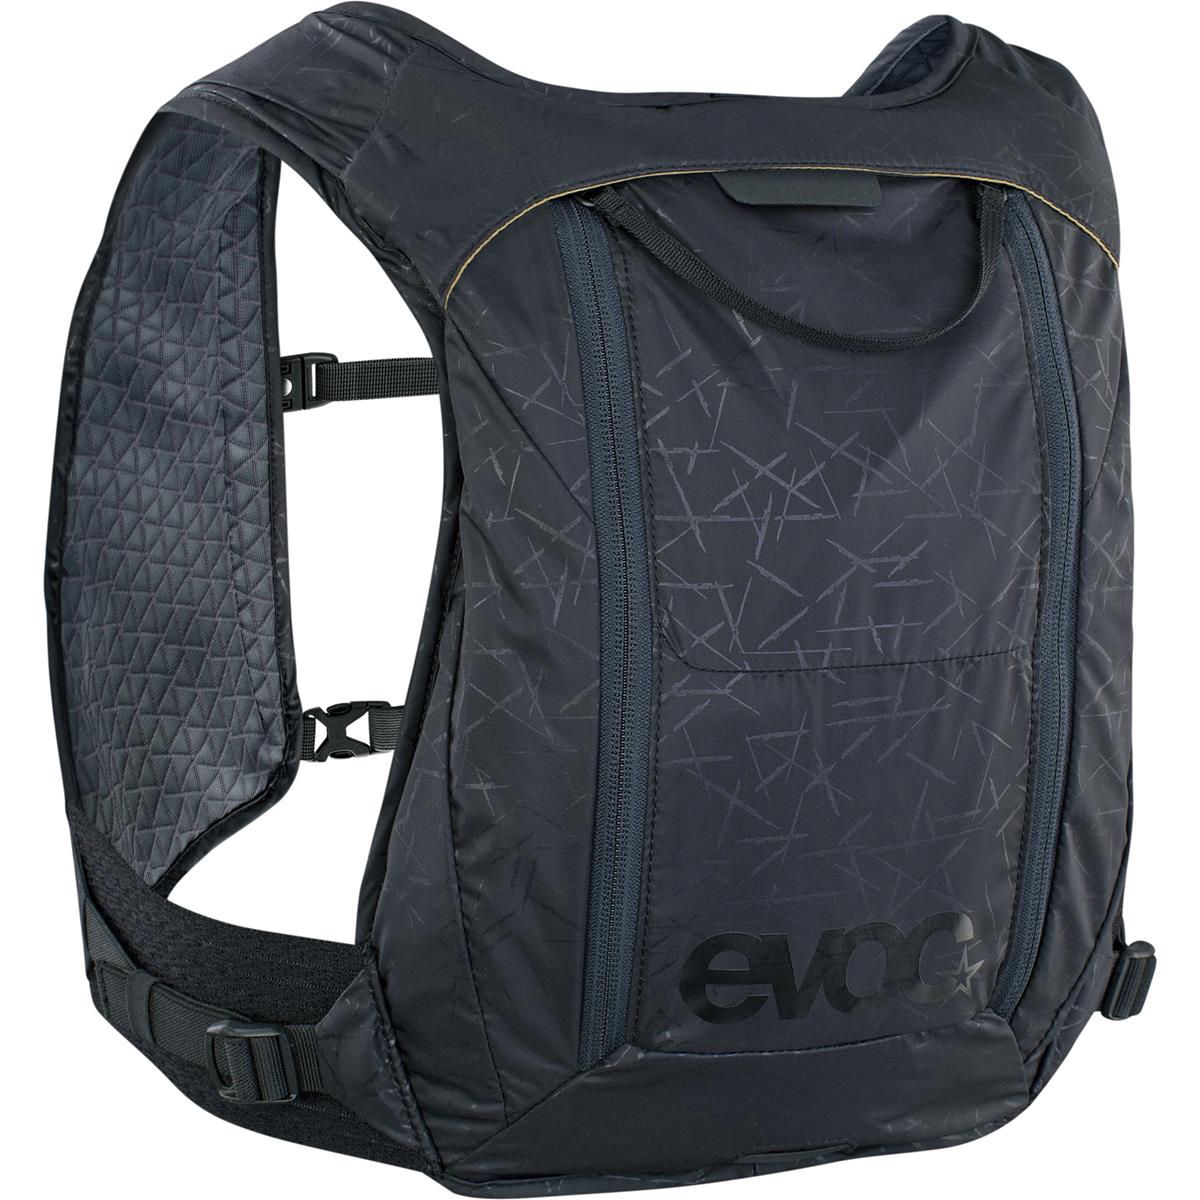 EVOC - Hydro Pro 3 Backpack